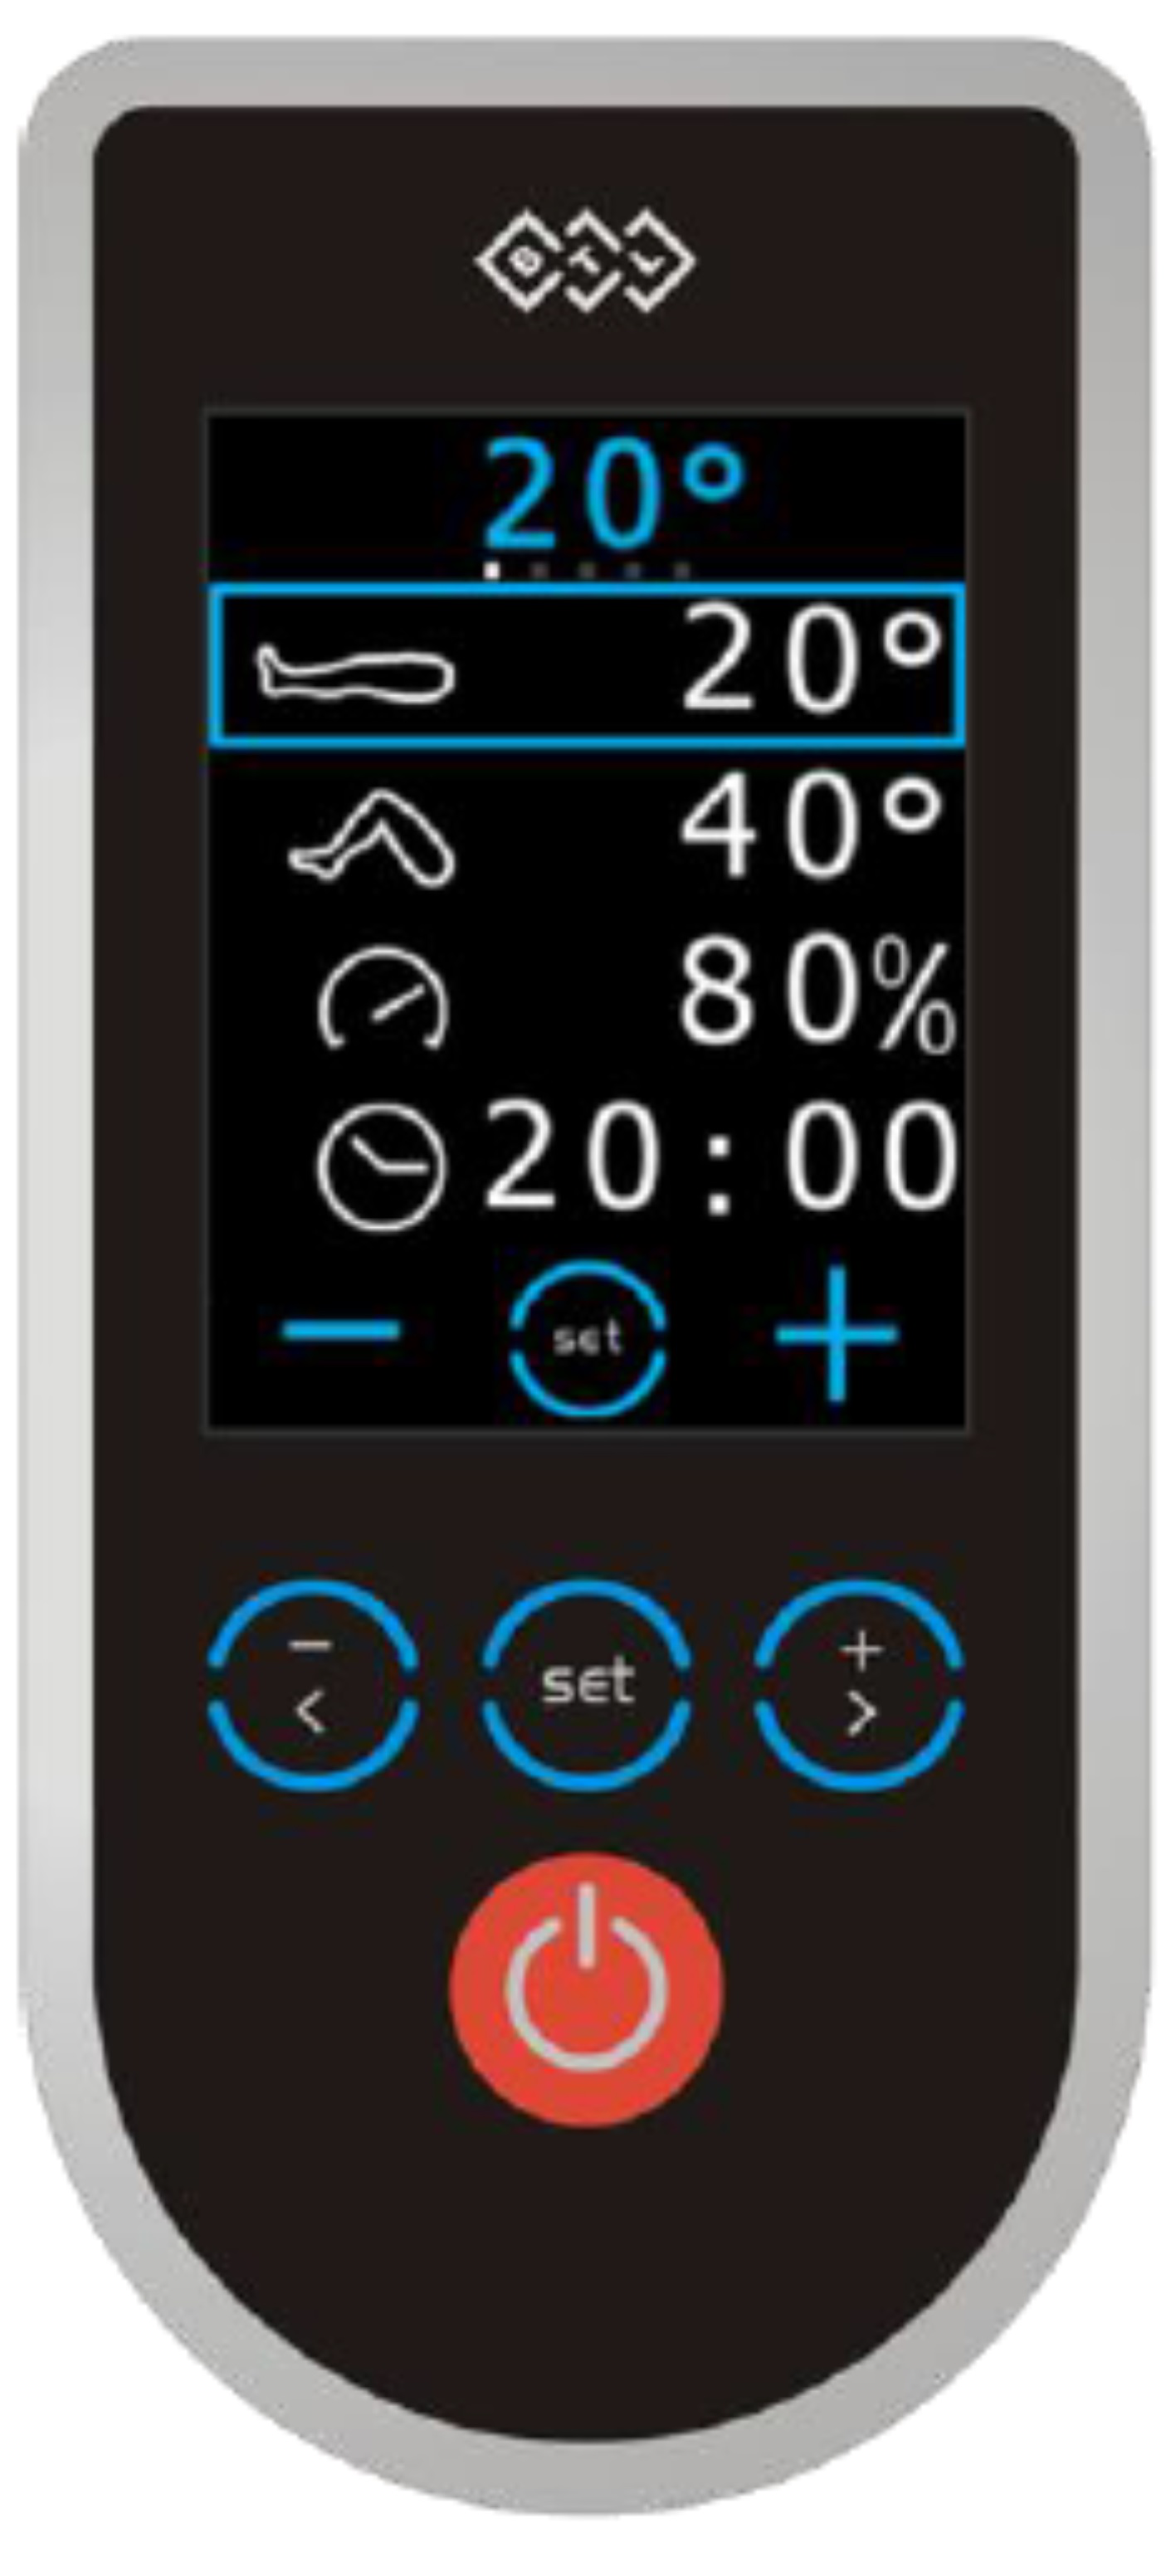 BTL Medical 物理治療,痛症管理,BTL-CPMotion™ 持續被動式運動治療儀 Remote control with touch screen